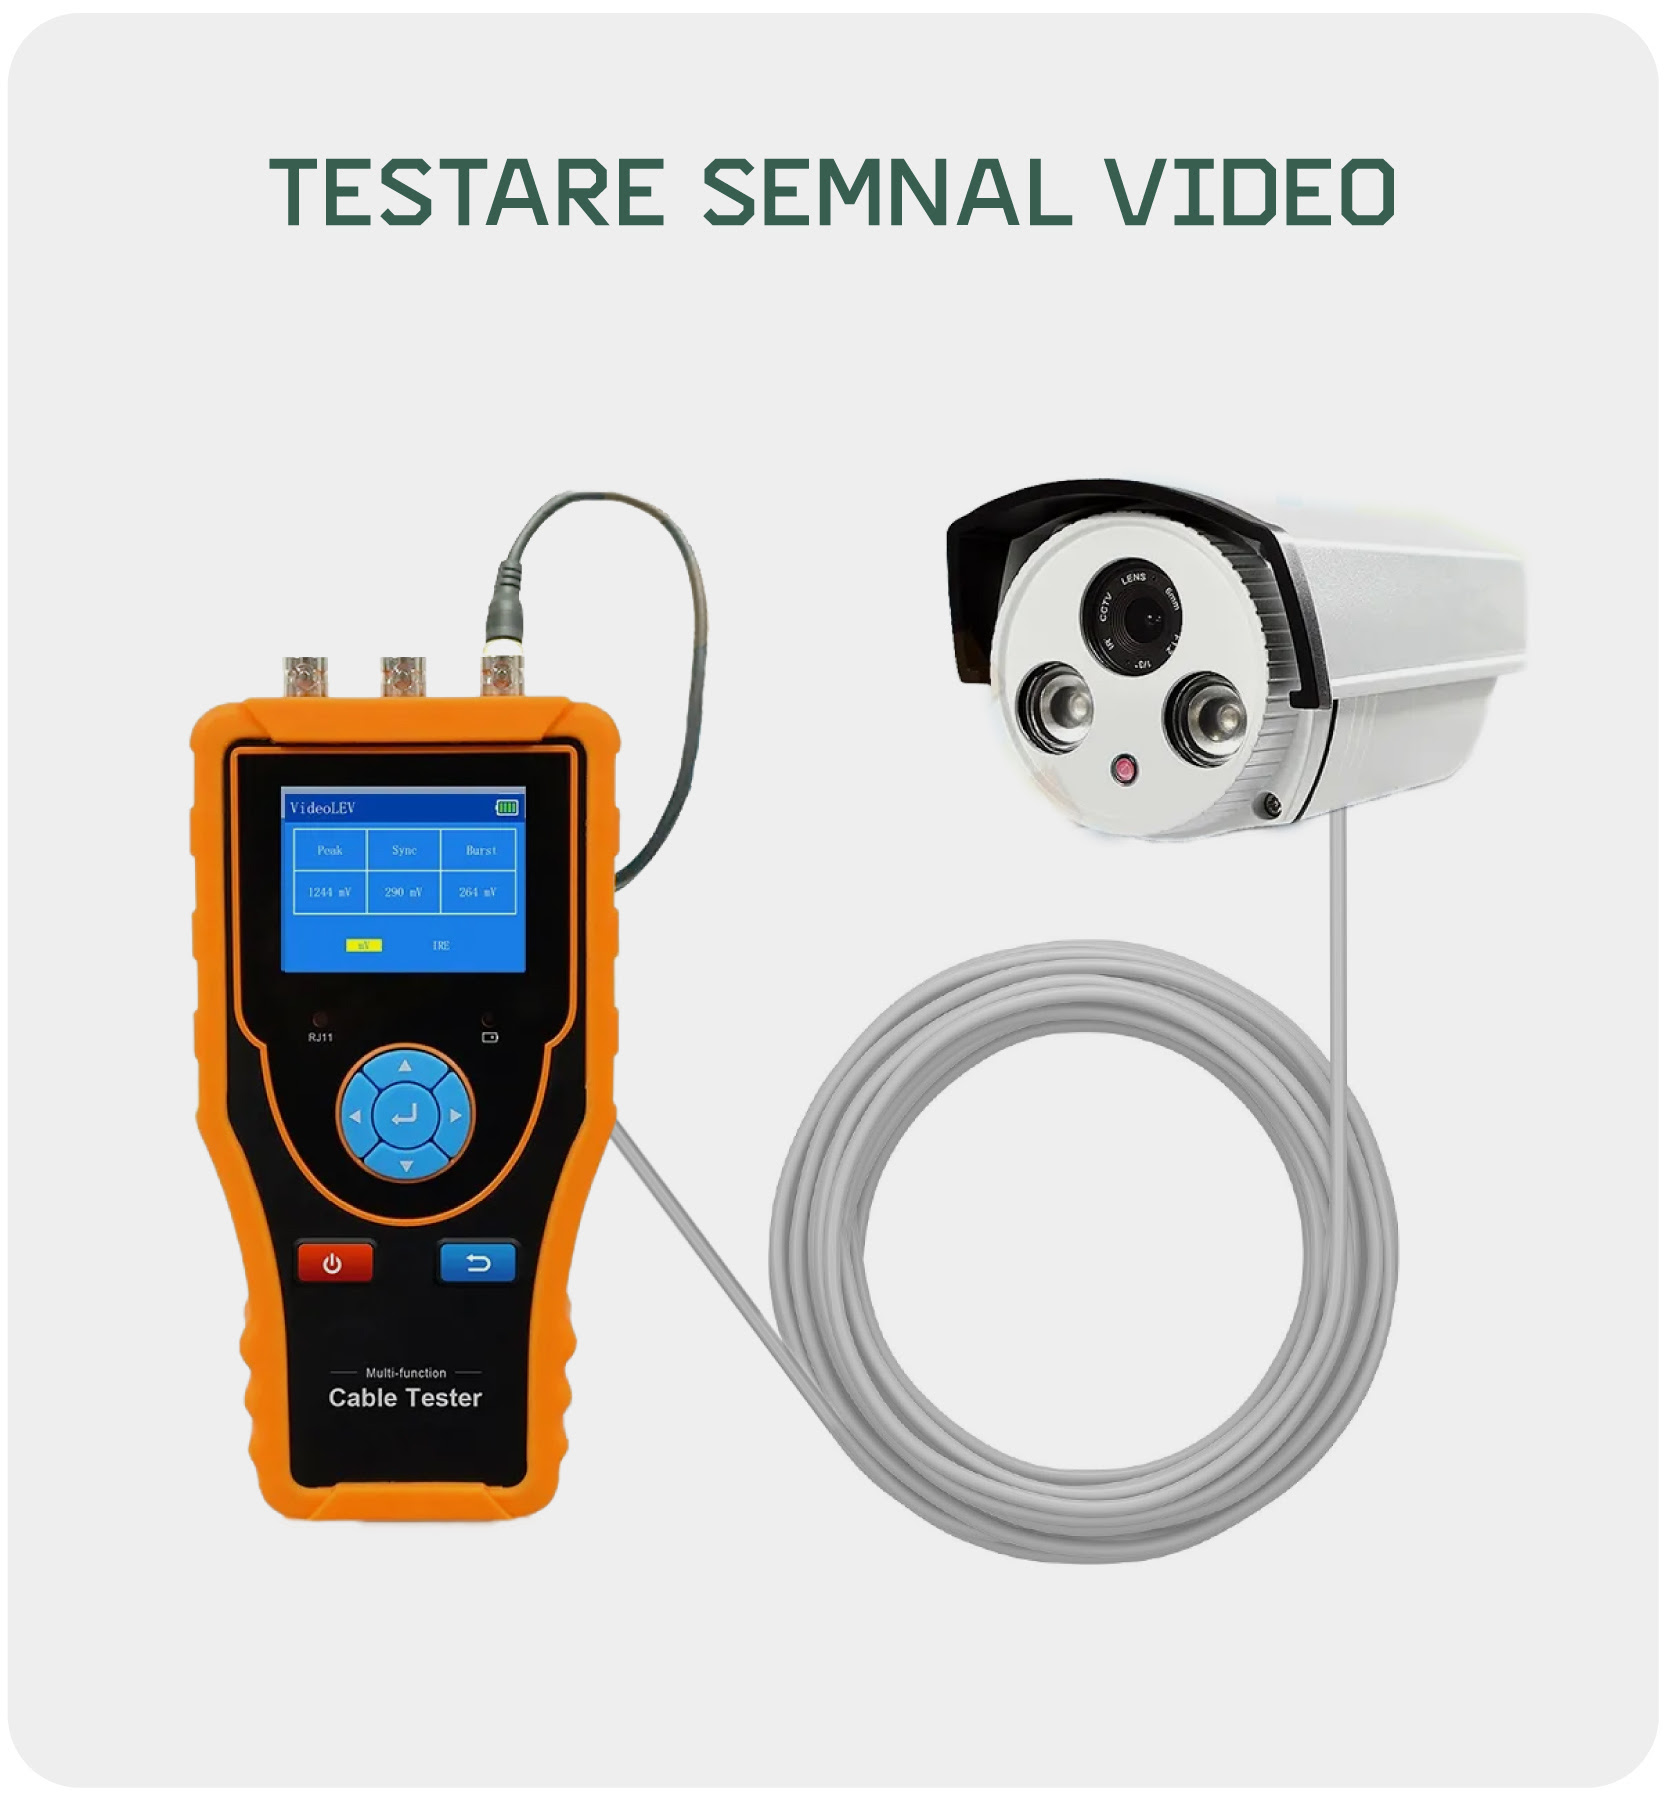 /testare-semnal-video-tester-lt-1200